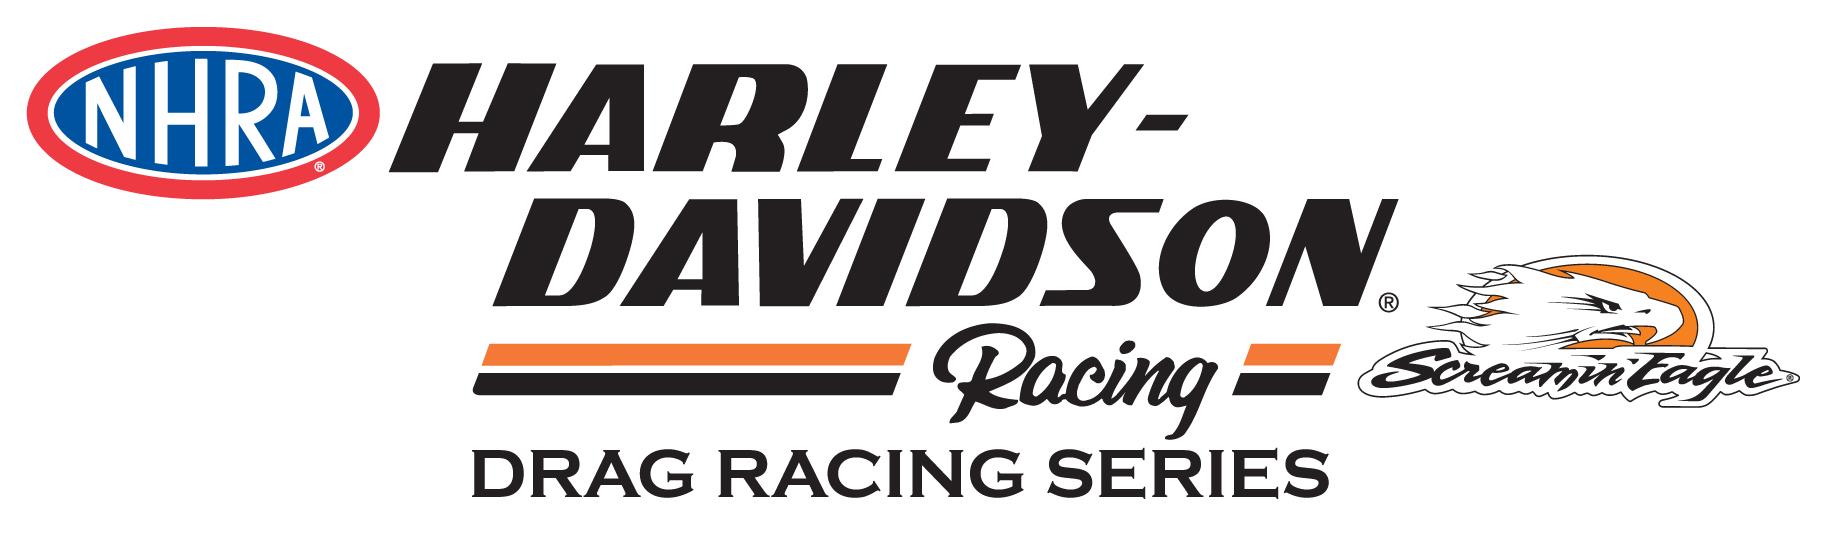 NHRA Drag Racing Logo - Harley Davidson Expands NHRA Drag Racing Series Classes